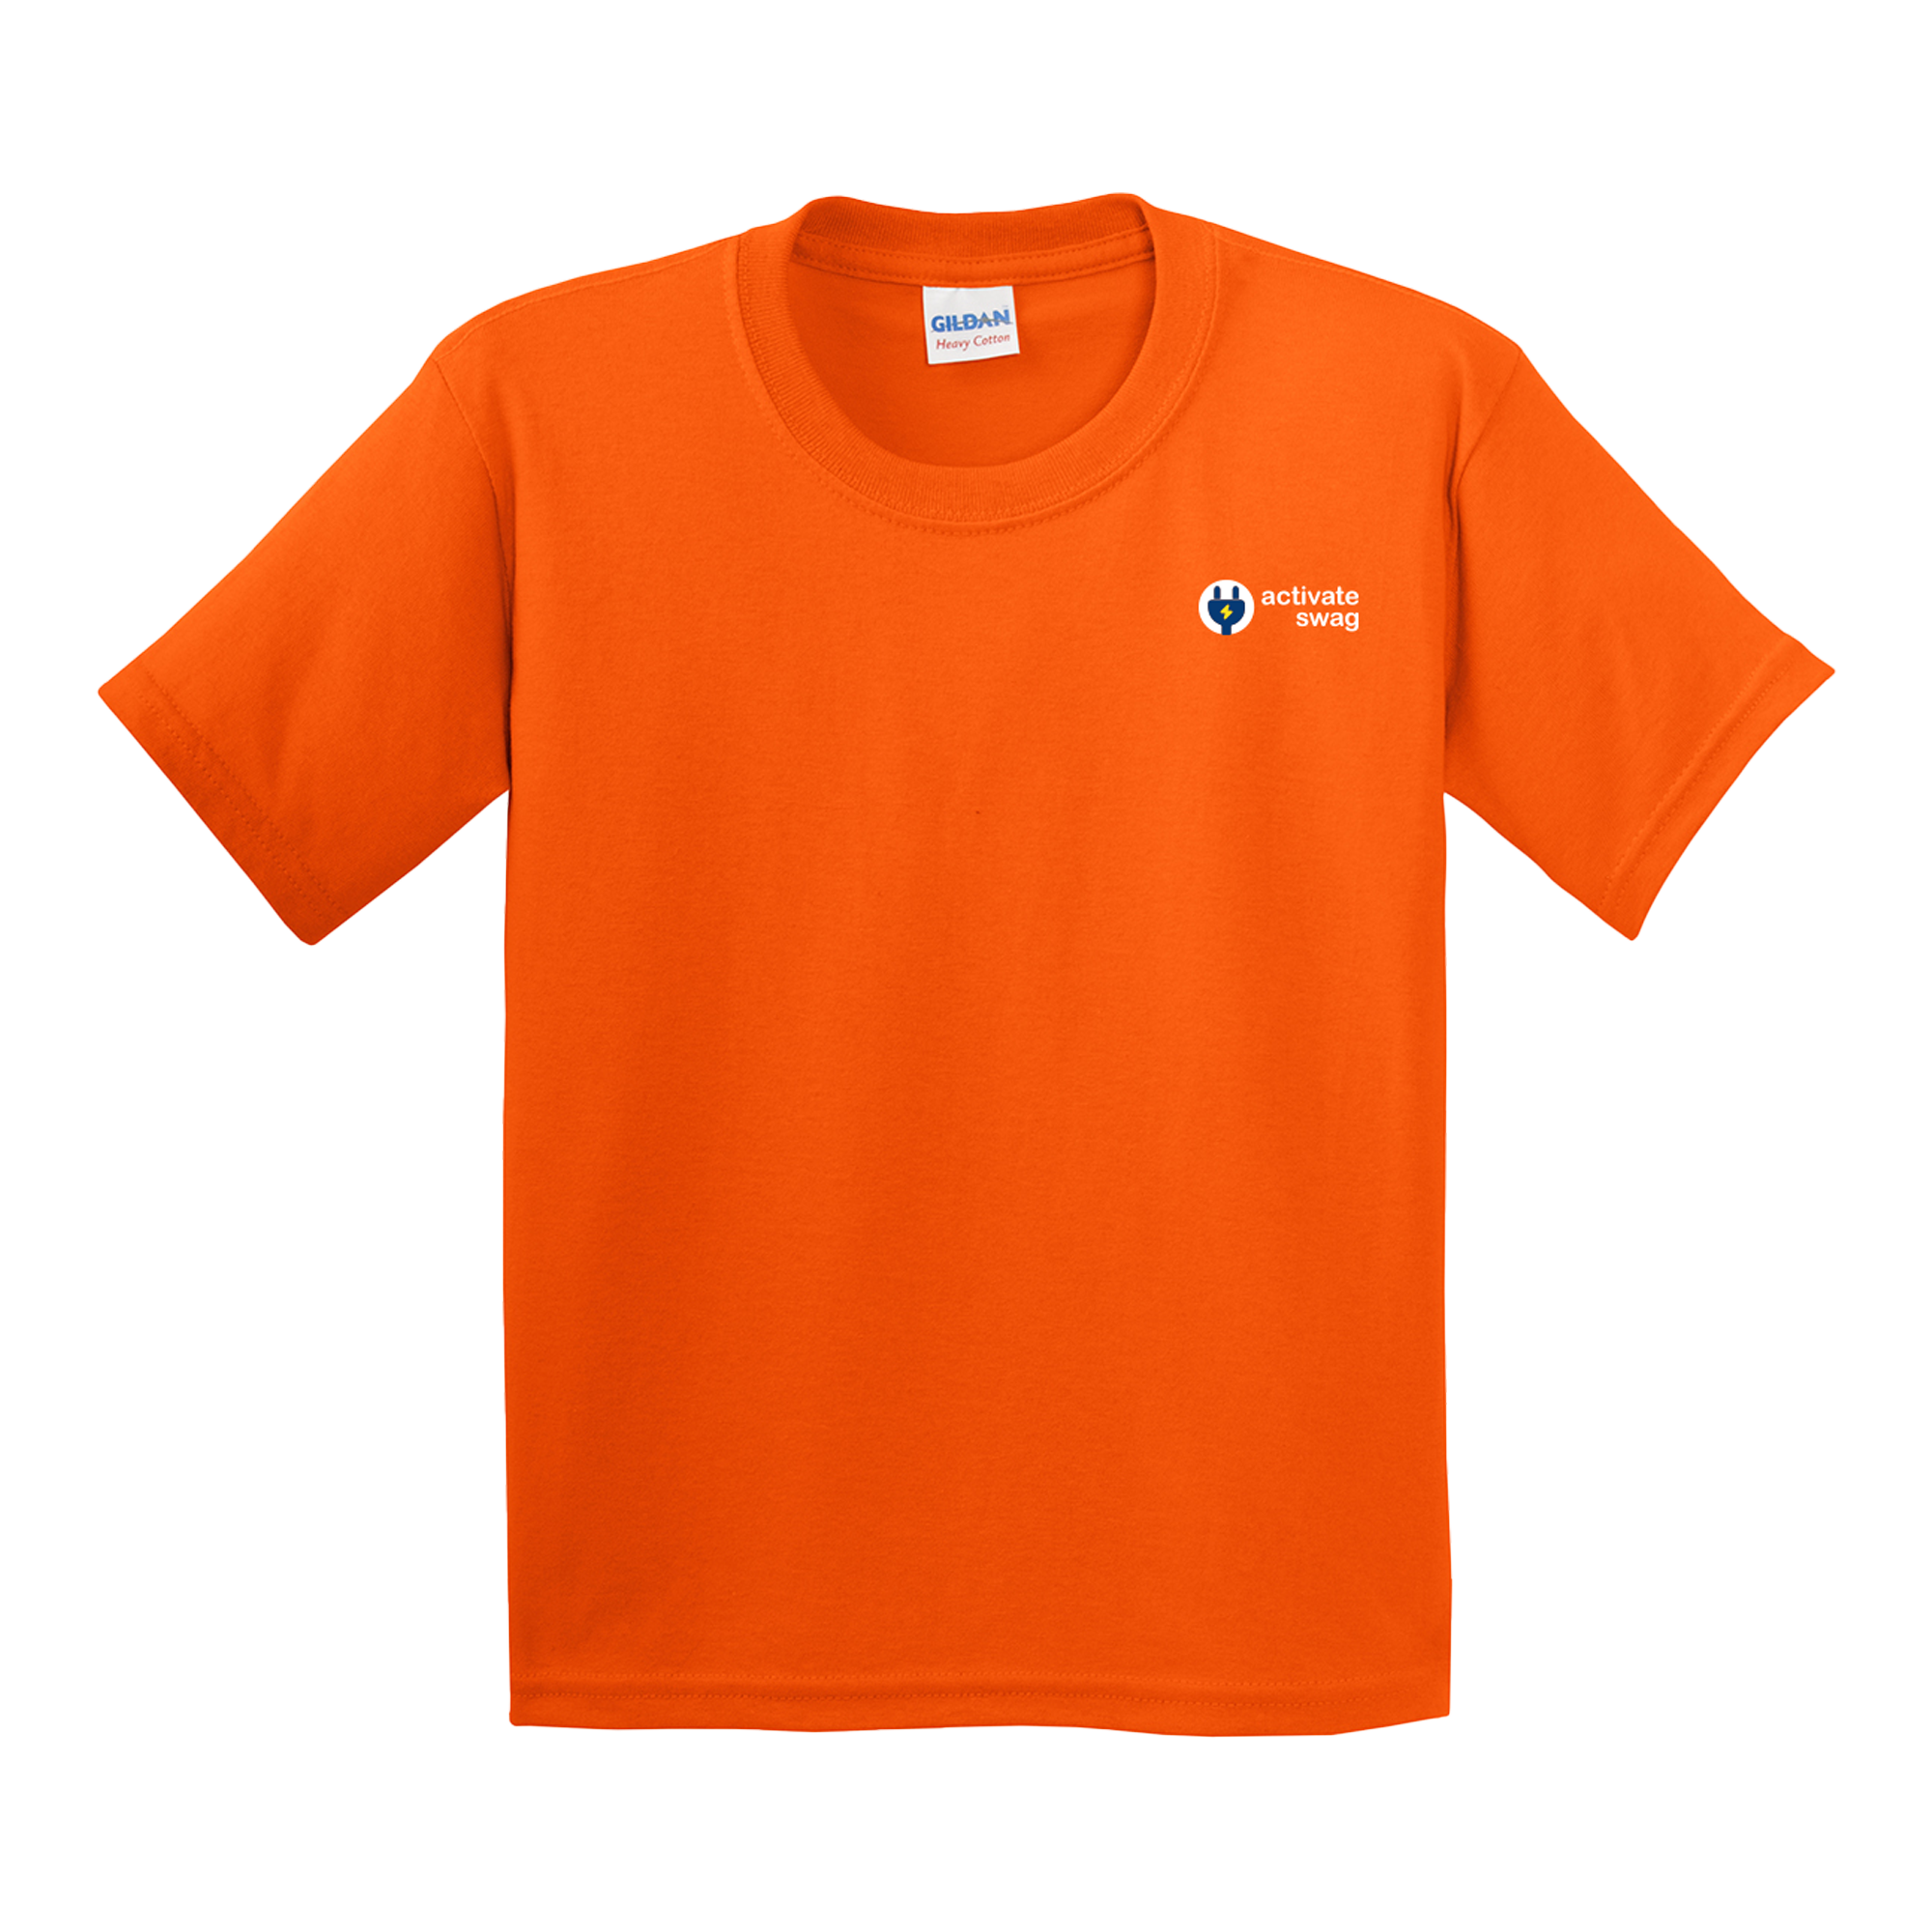 Gildan Basic Youth T-Shirt